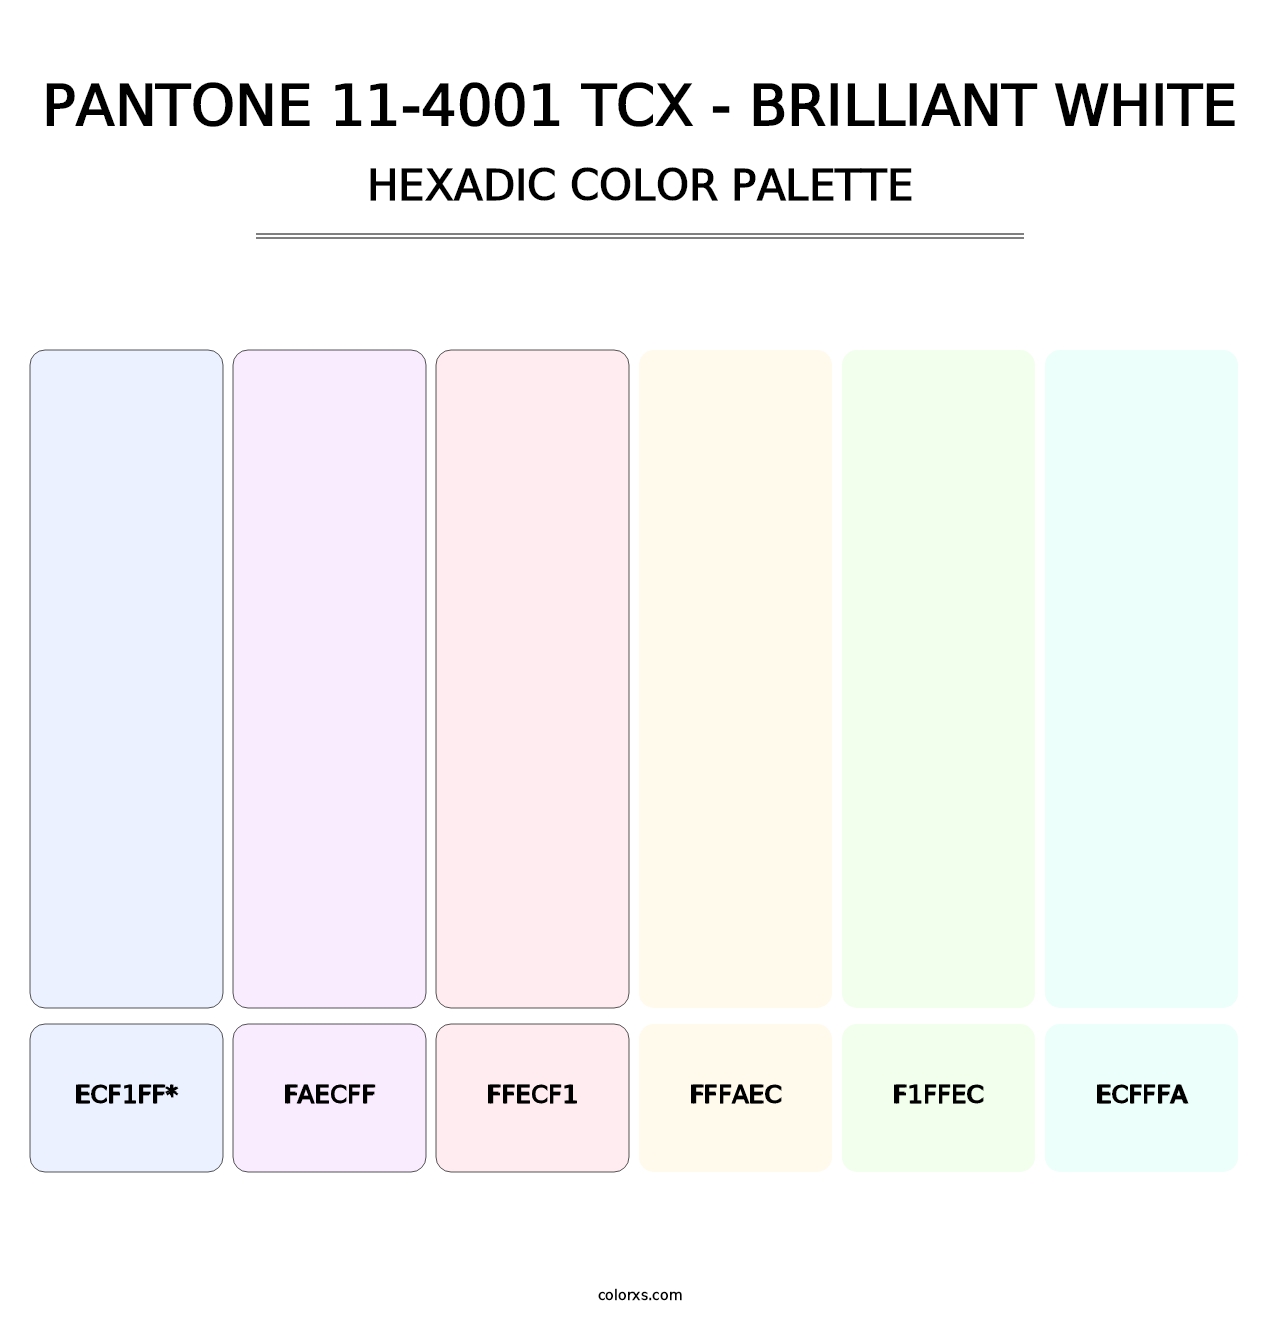 PANTONE 11-4001 TCX - Brilliant White - Hexadic Color Palette